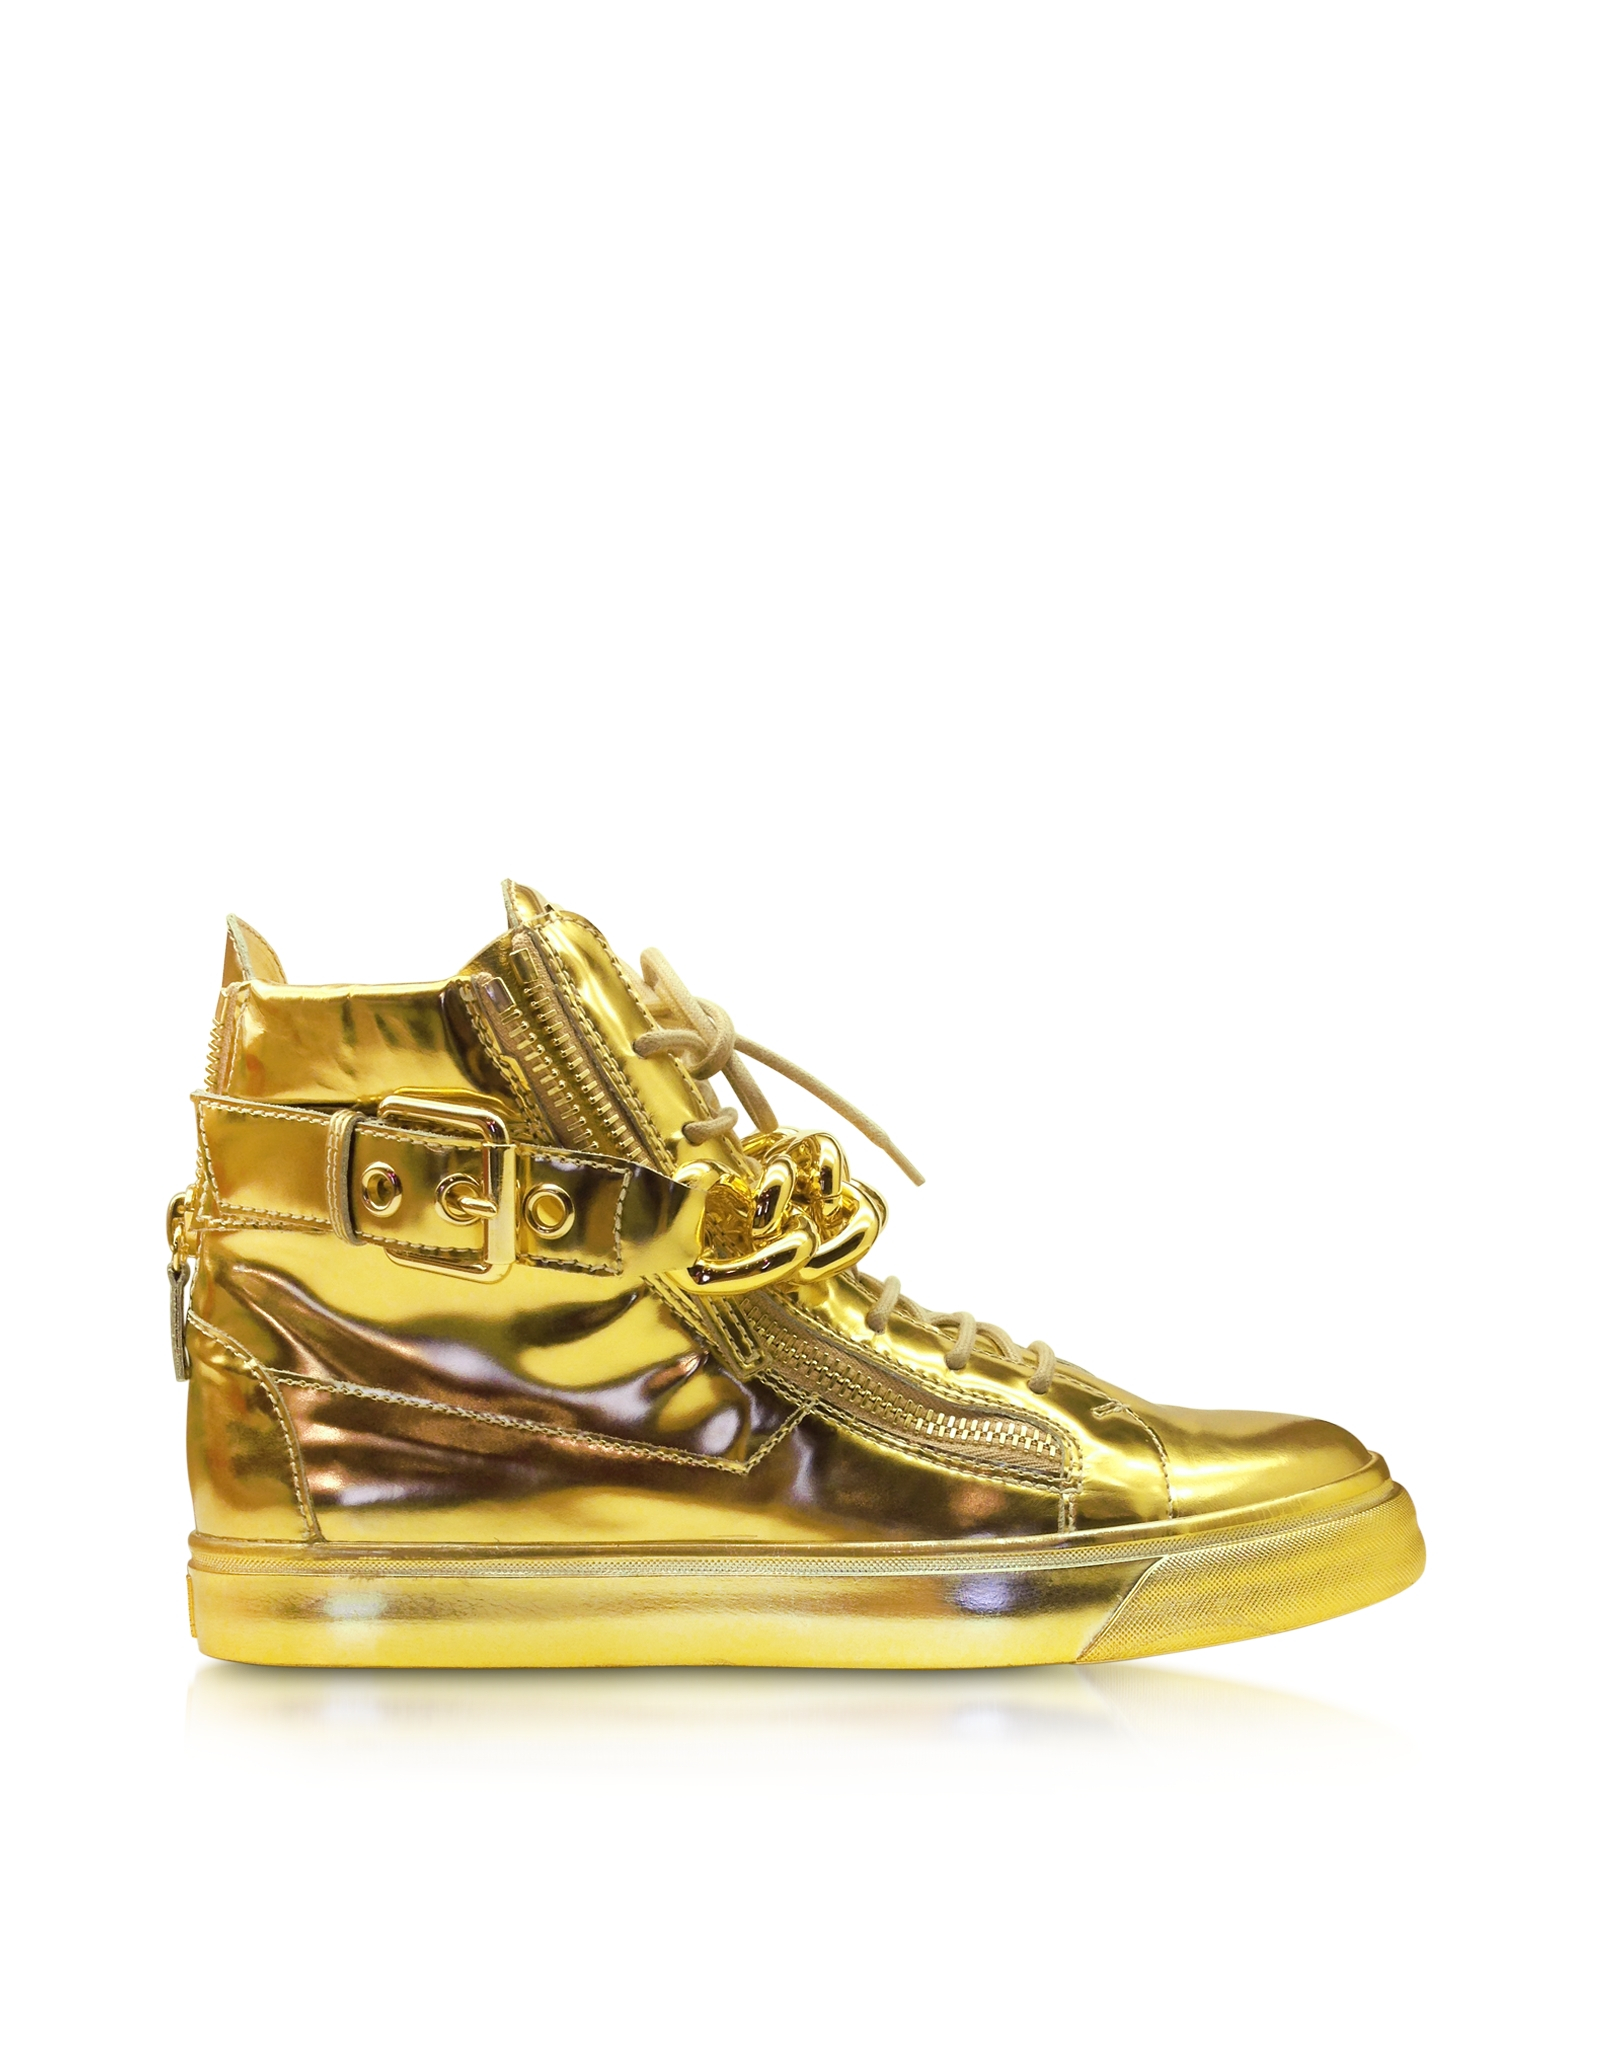 Lyst - Giuseppe Zanotti Gold Metallic Leather High-Top Sneaker in ...